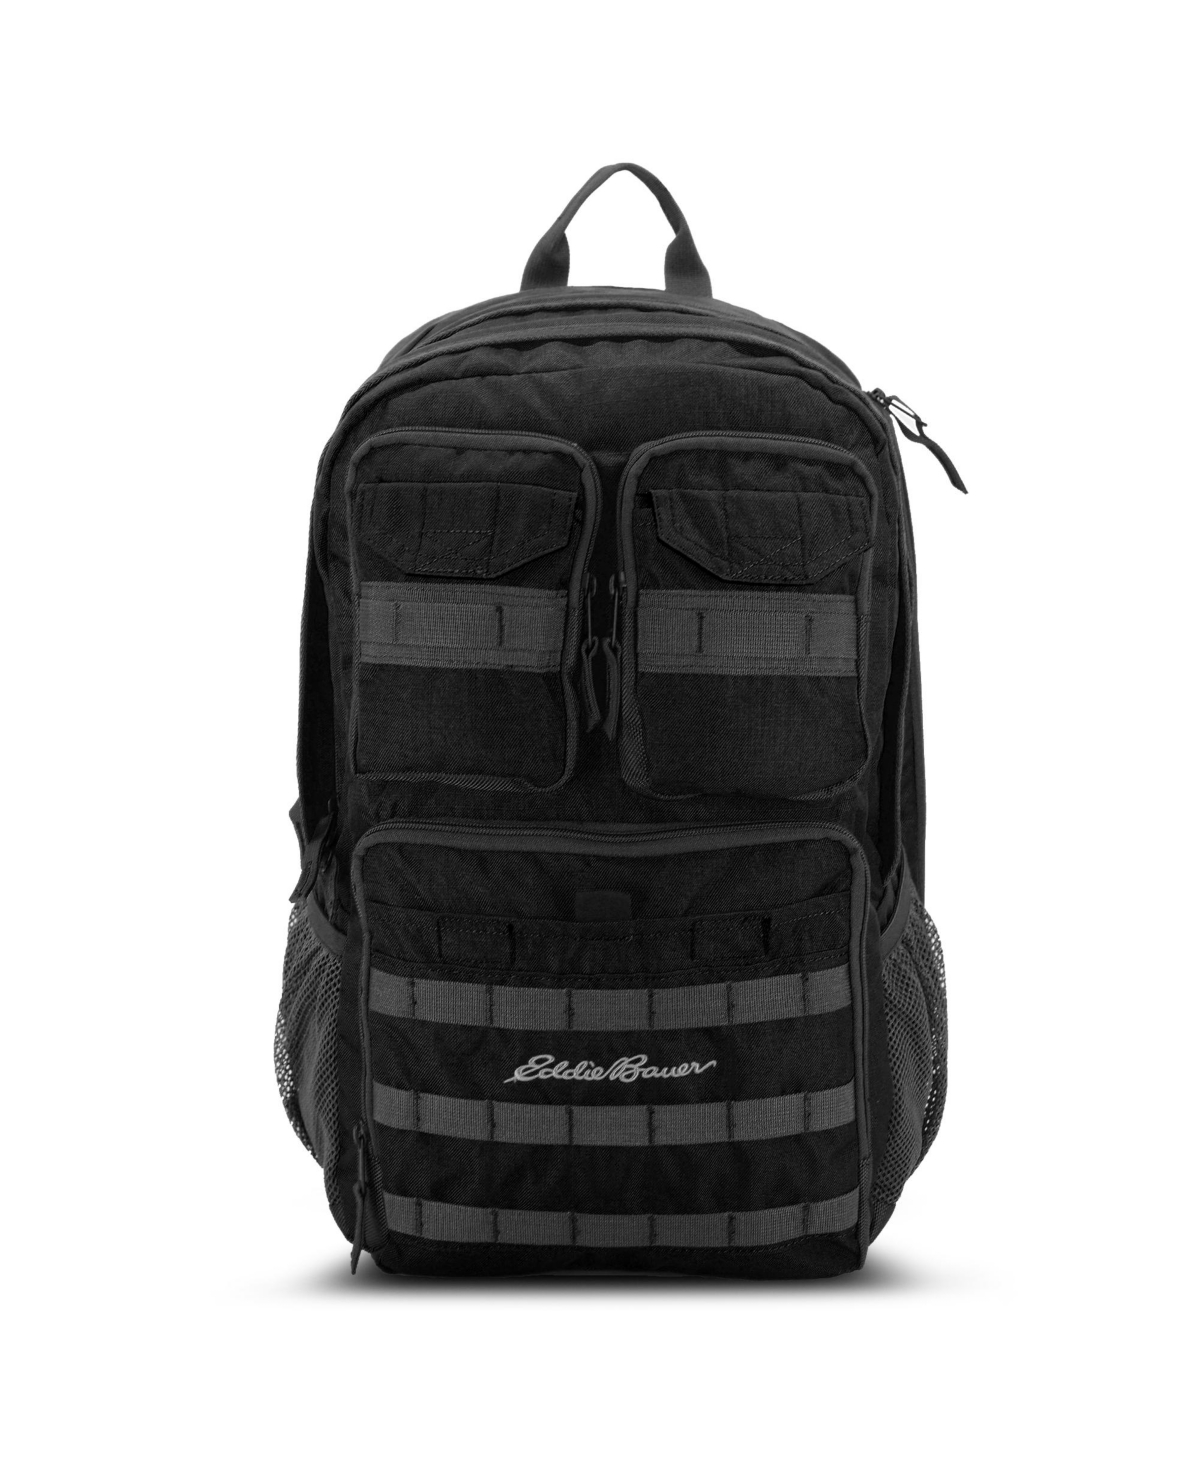 Cargo 30 Liters Backpack - Black